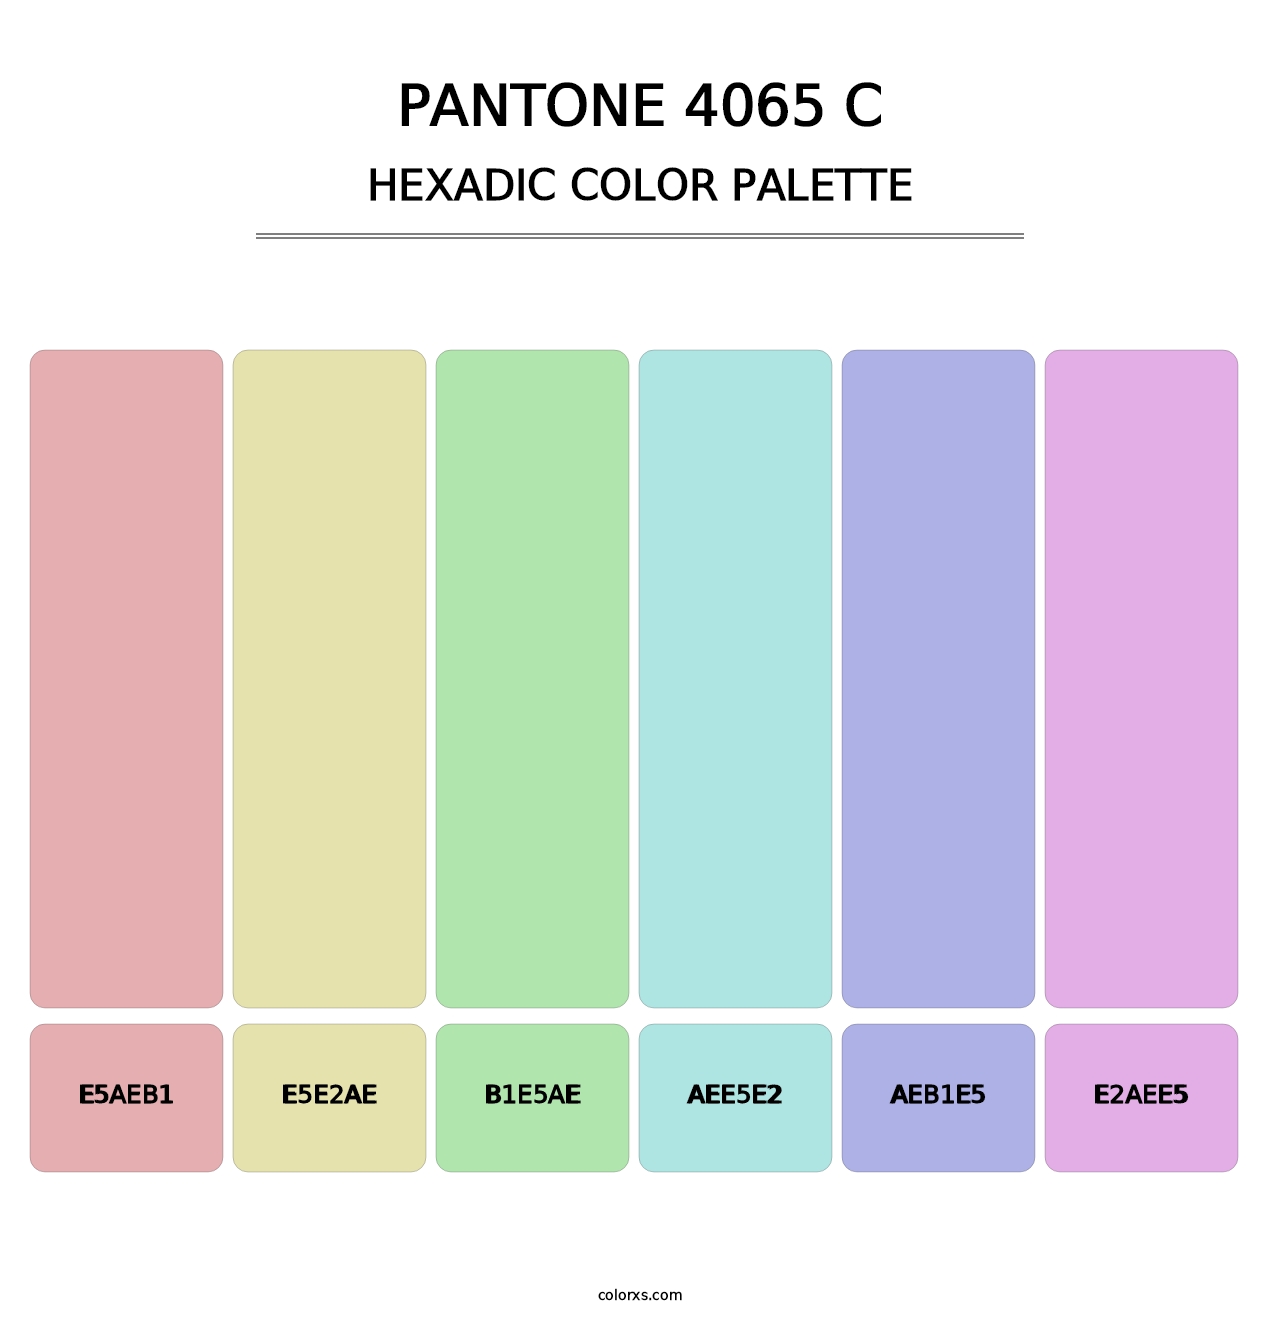 PANTONE 4065 C - Hexadic Color Palette